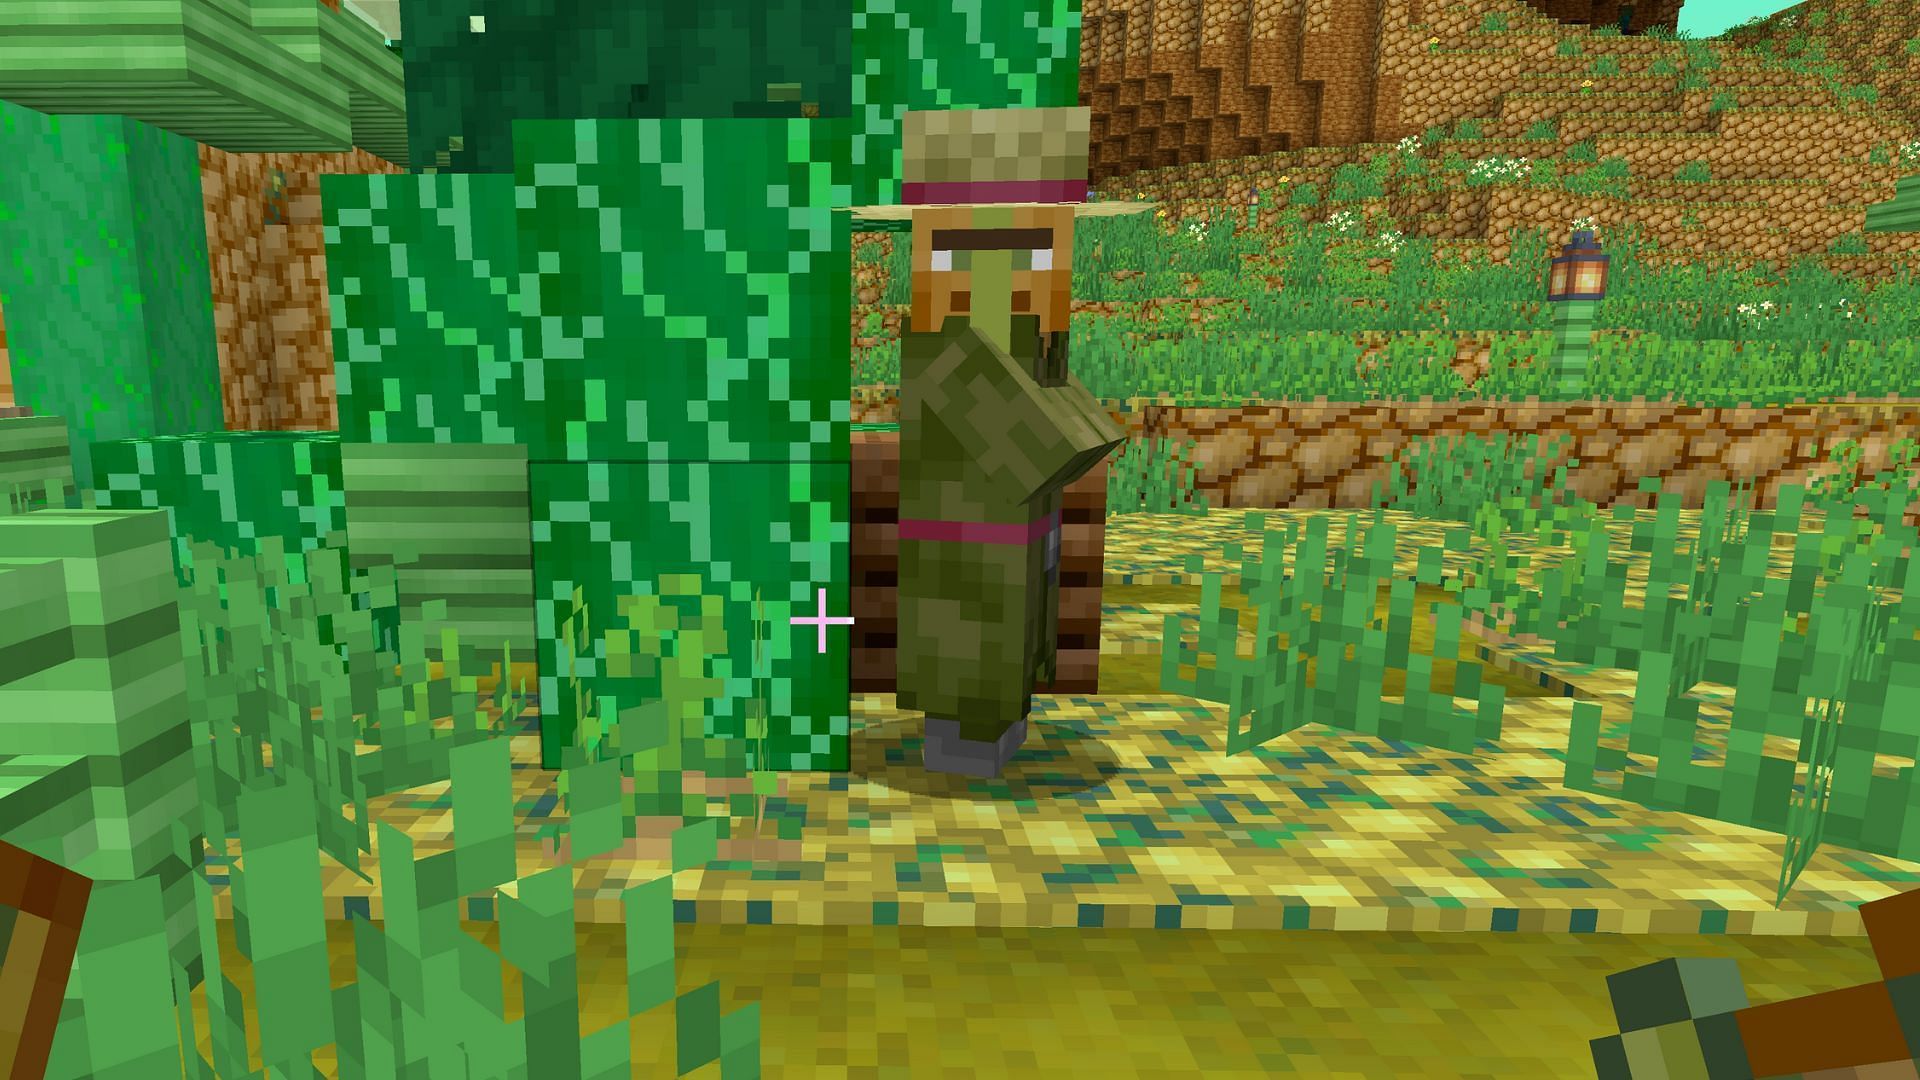 The villager in Potato dimension (Image via Mojang Studios)